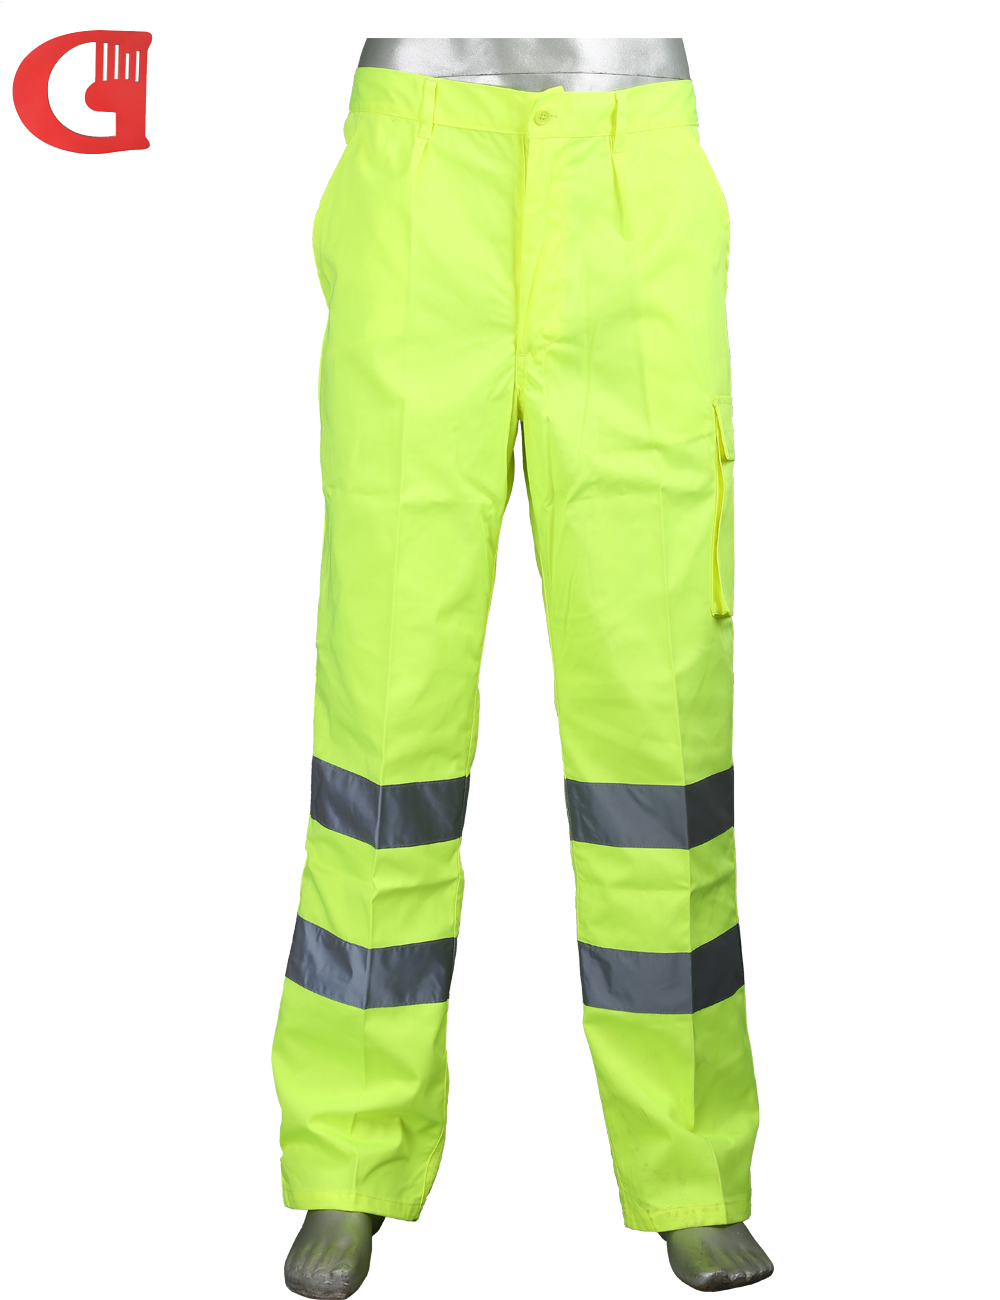 Safety Workwear Pants Reflective Uniform Hi Viz Cargo Pants